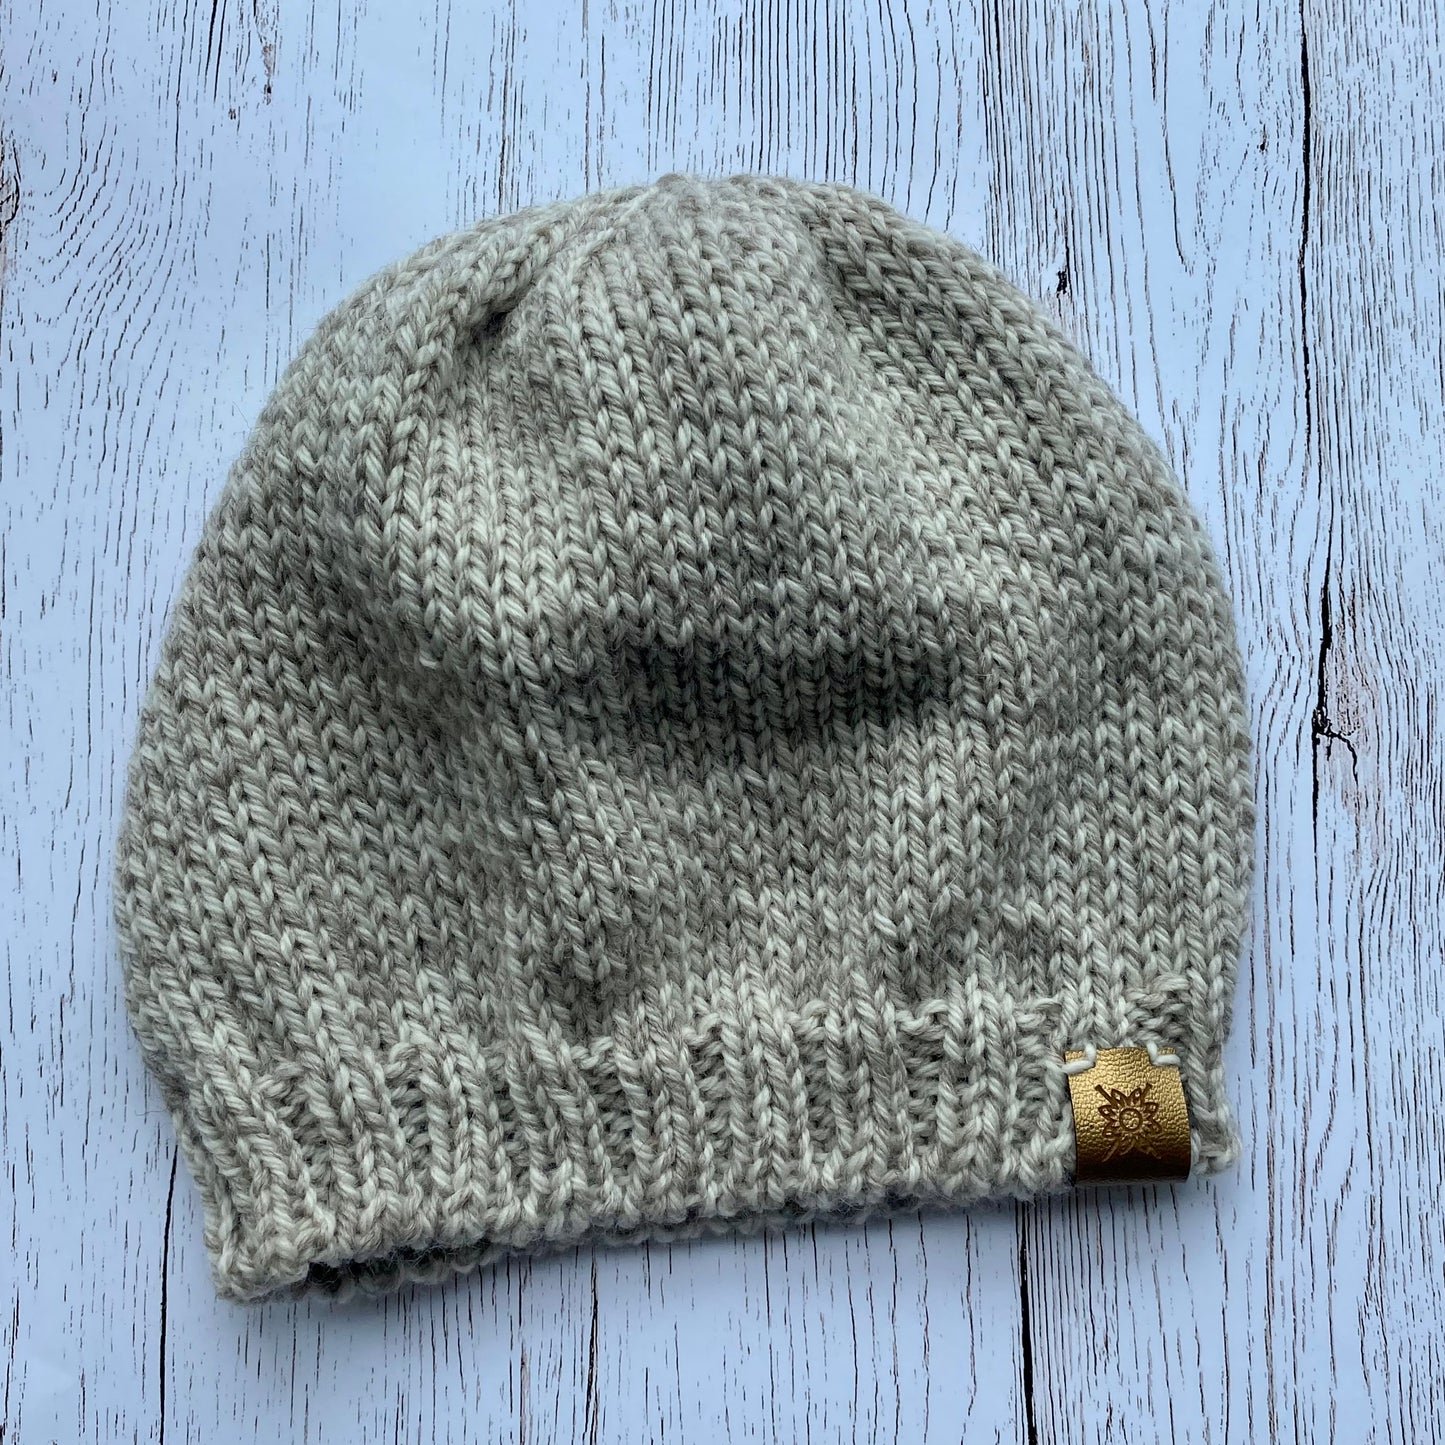 Adult Handknitted Ragg Wool Hat, Medium, Light Gray/Ivory